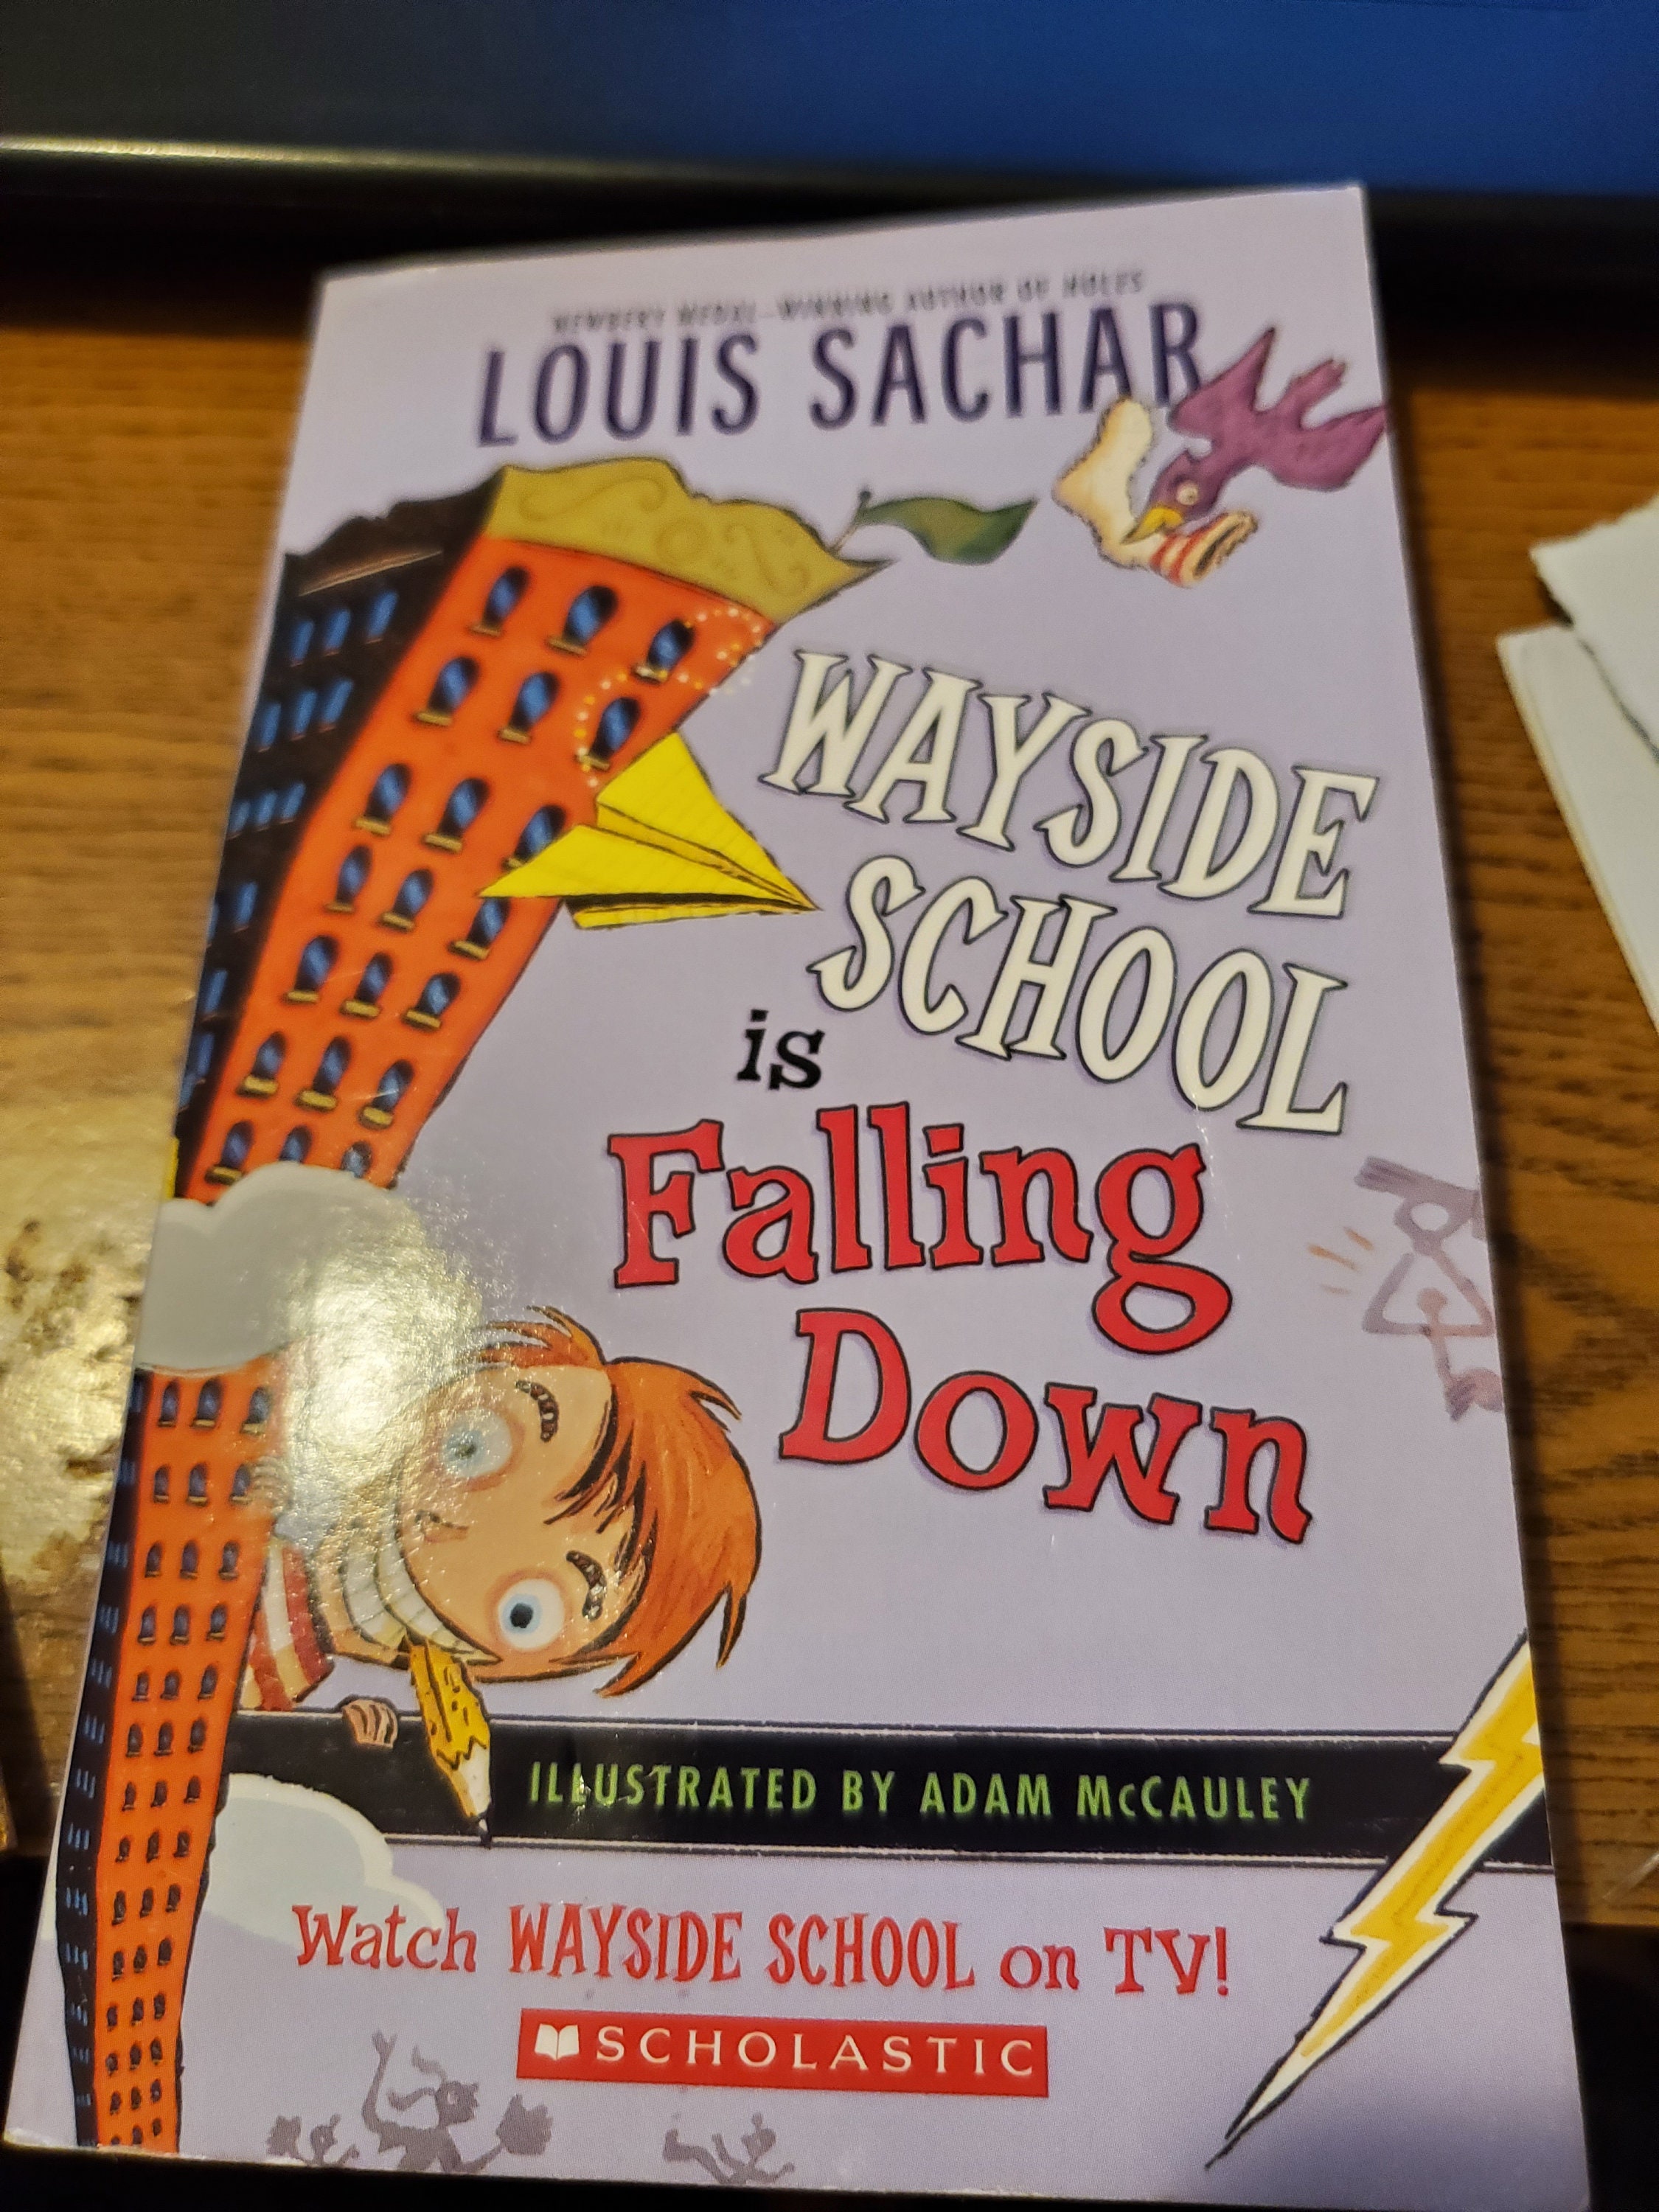 Wayside School is Falling Down, Louis Sachar Lit Link/Novel Study Grad